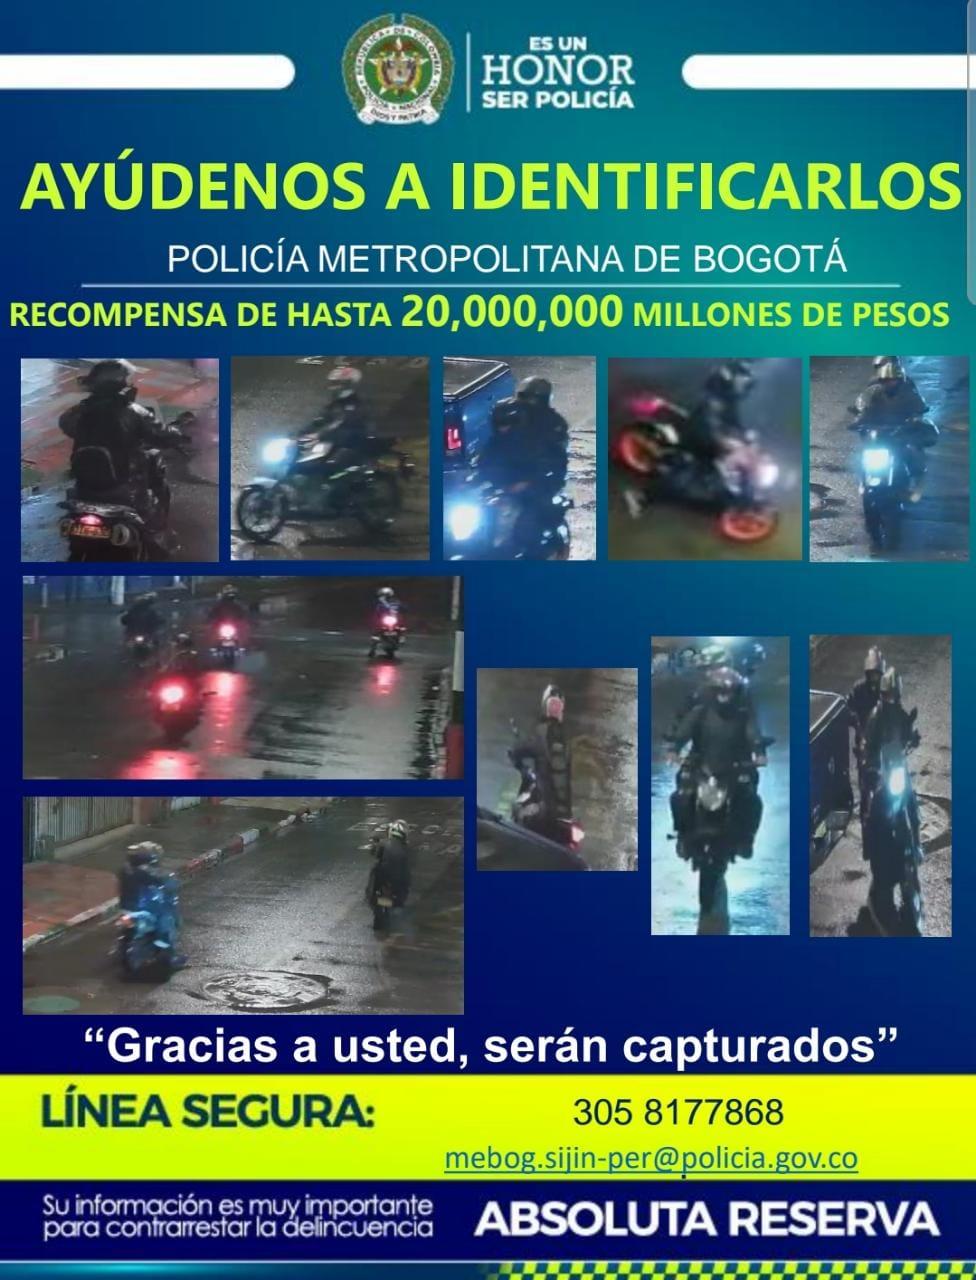 Policía frece recompensa de $20 millones por información para identificar a ‘Motoladrones’ en Bogotá